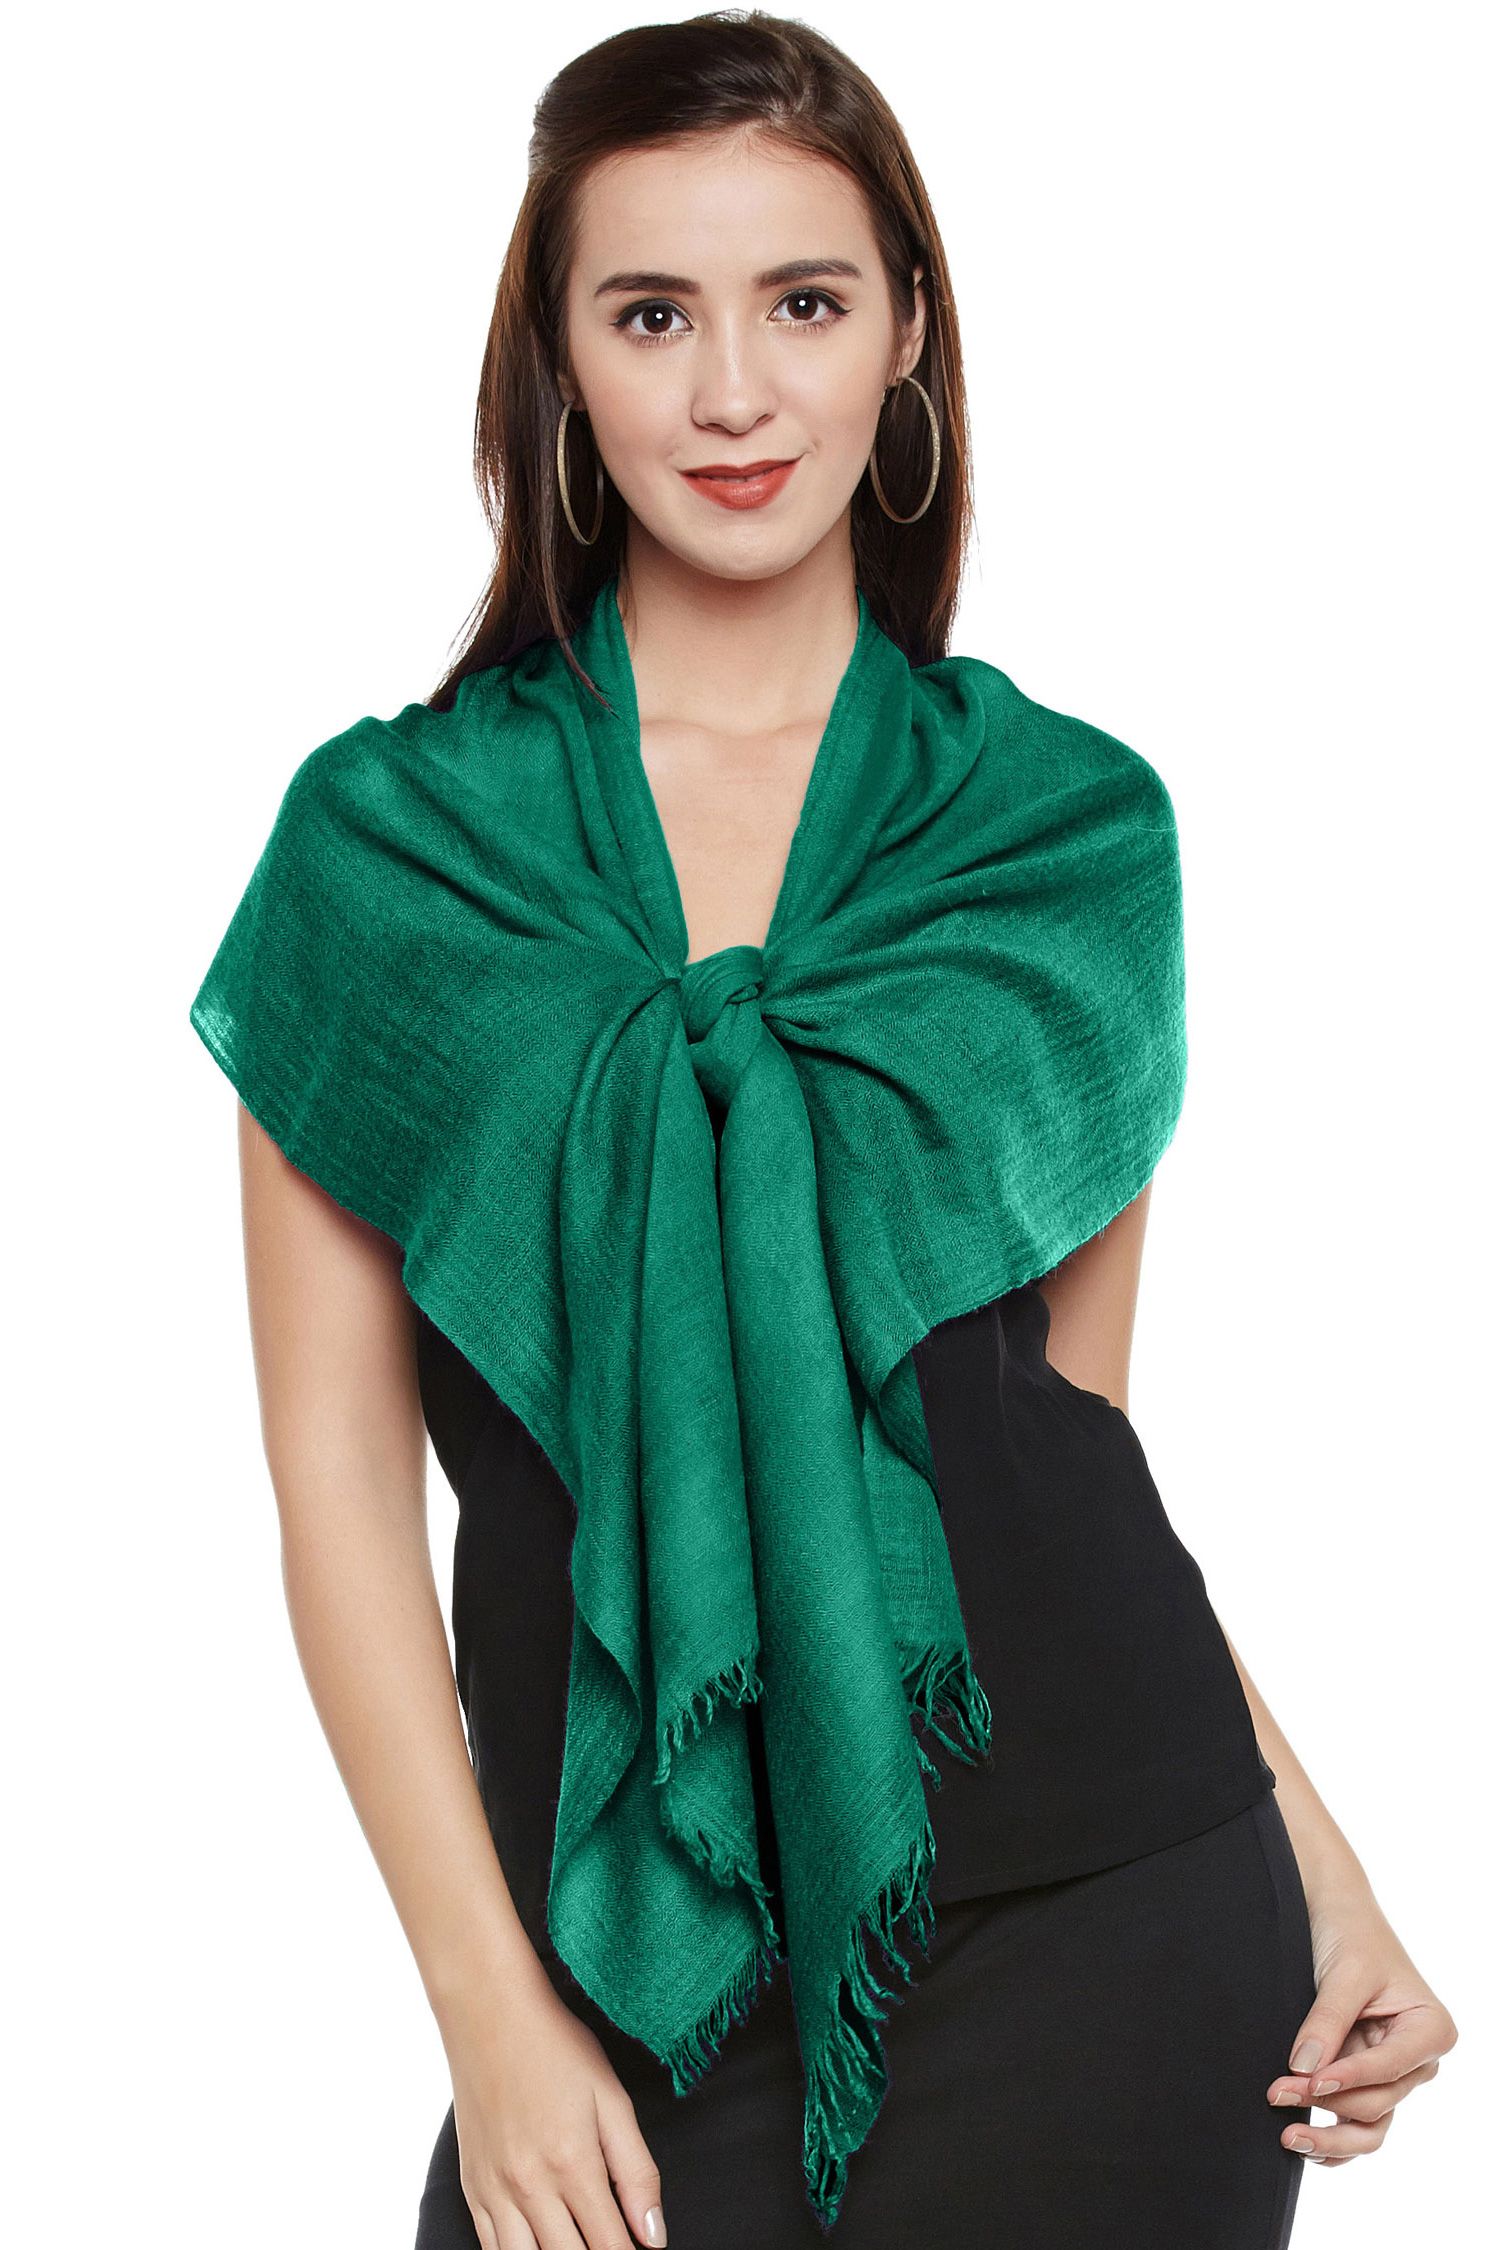 Green scarf - tyredcarbon